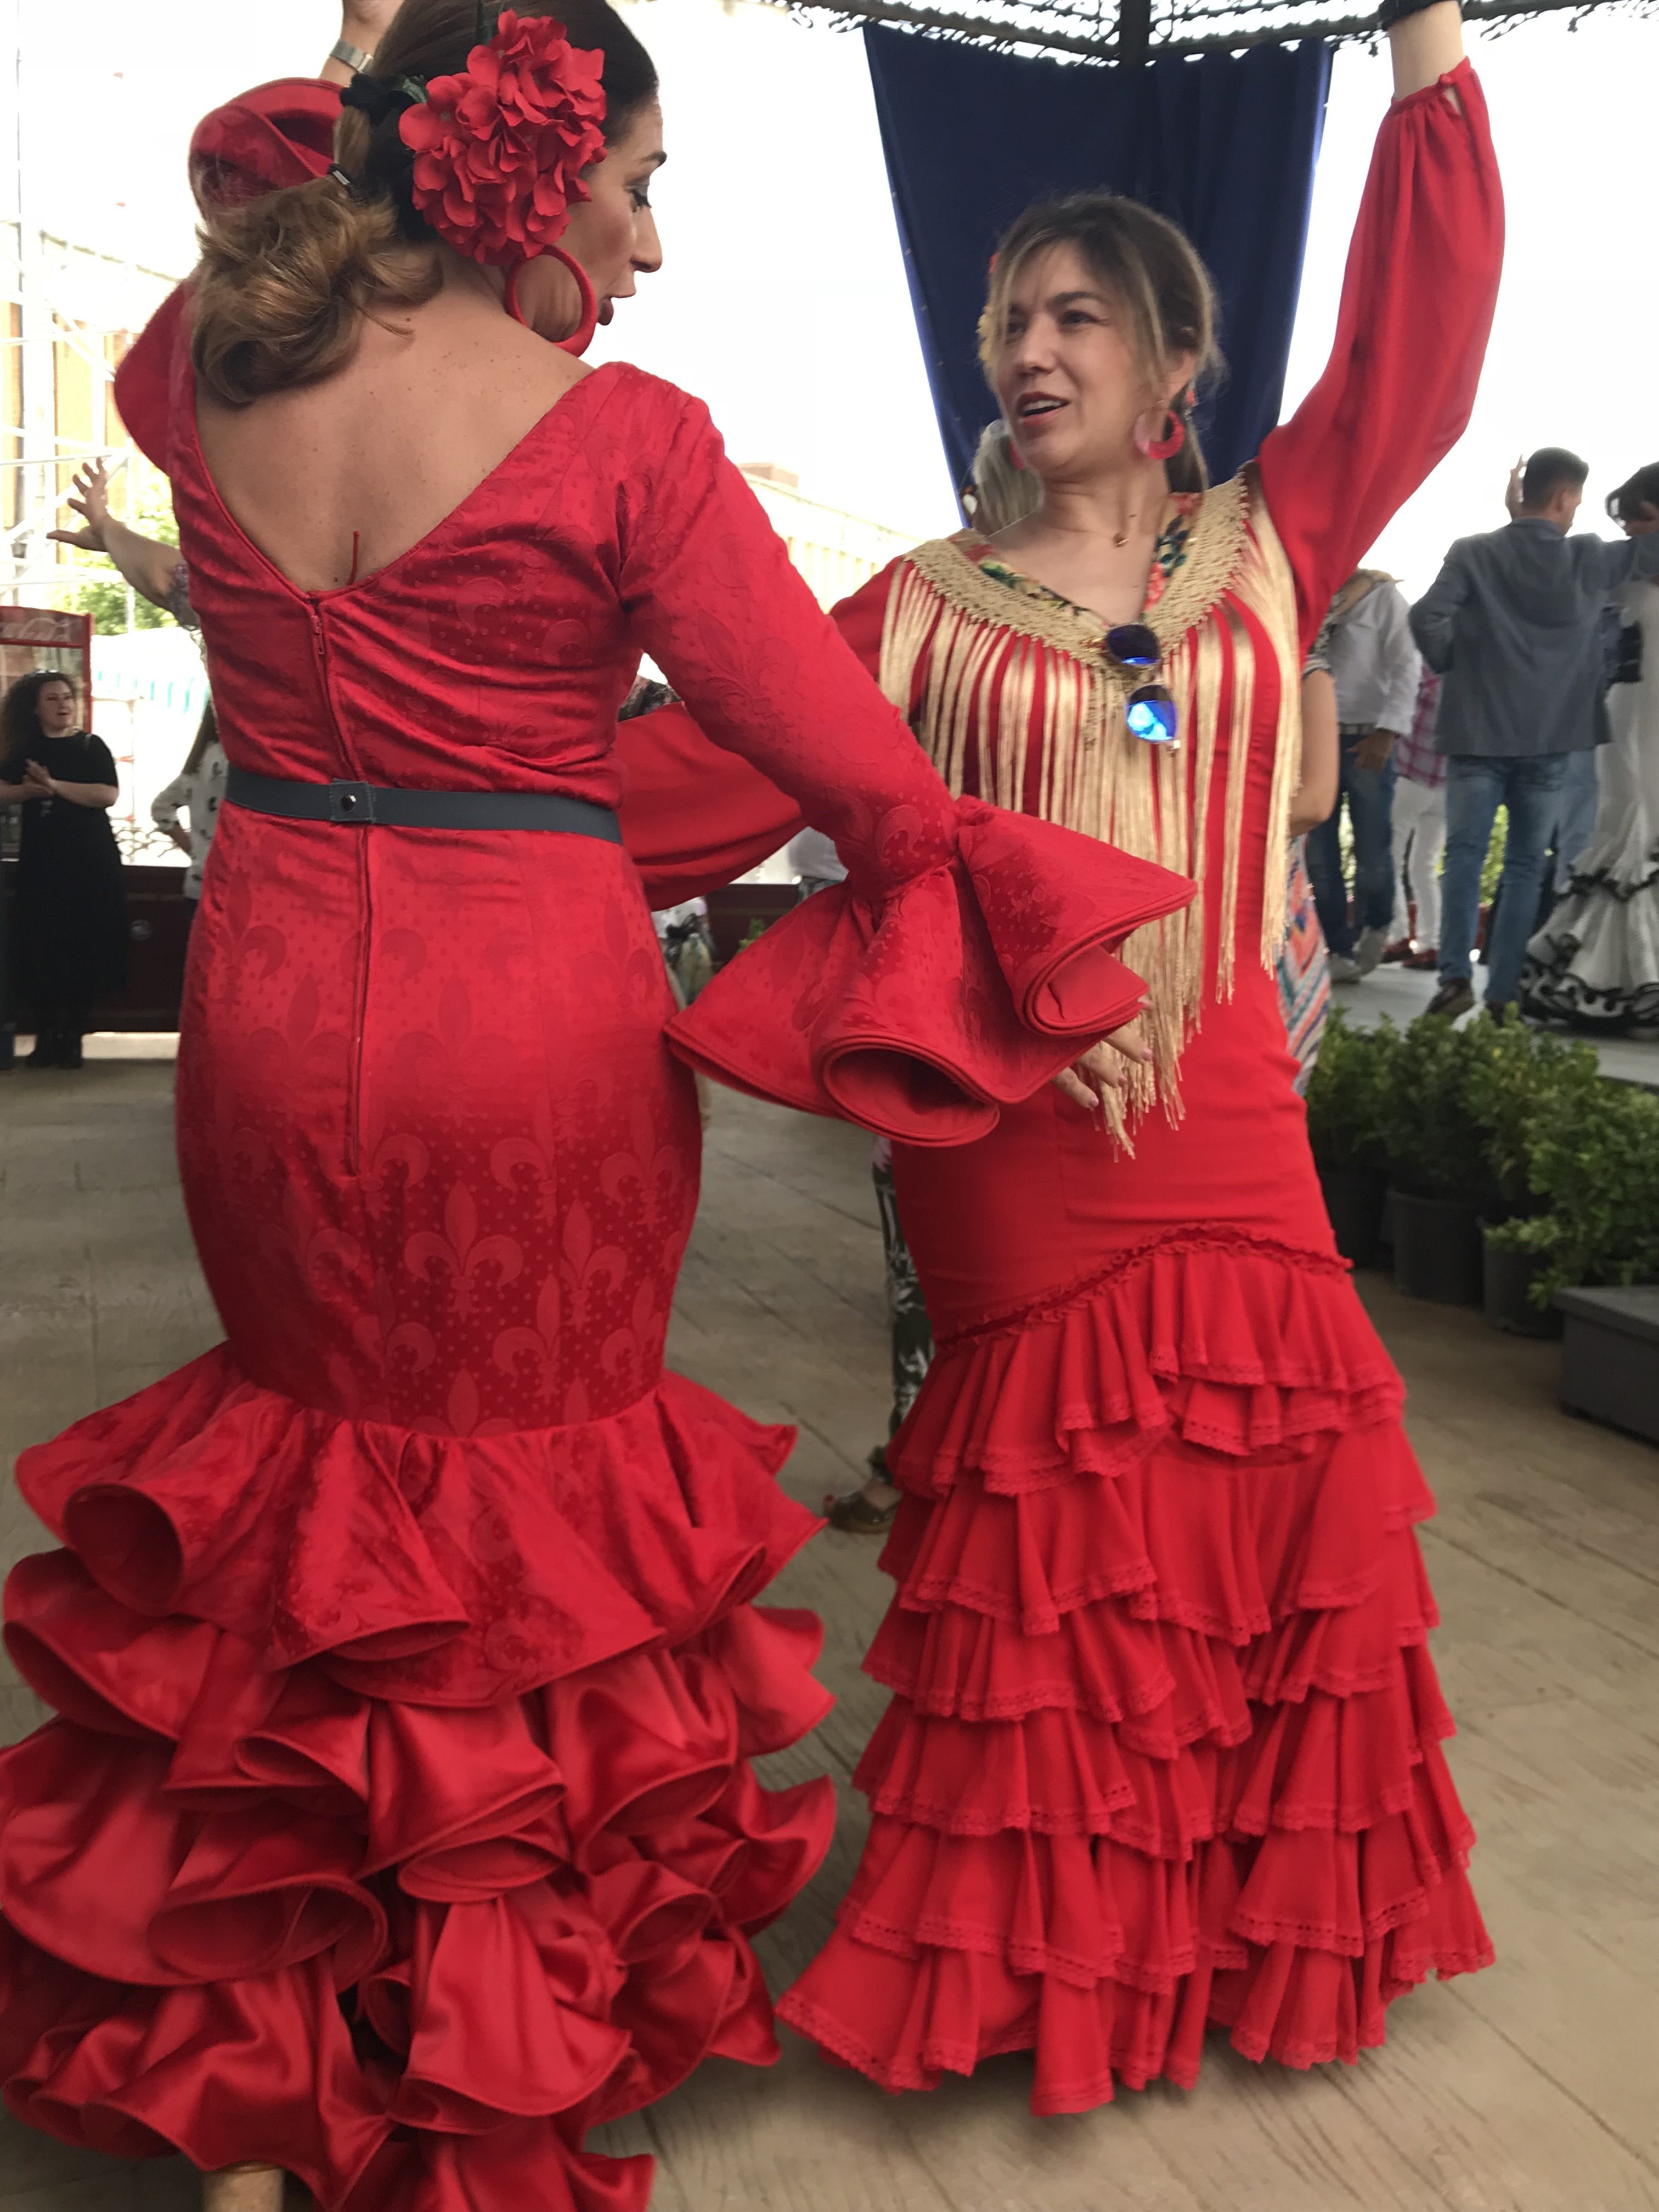 Olé in Paris — a story of a wild flamenco night